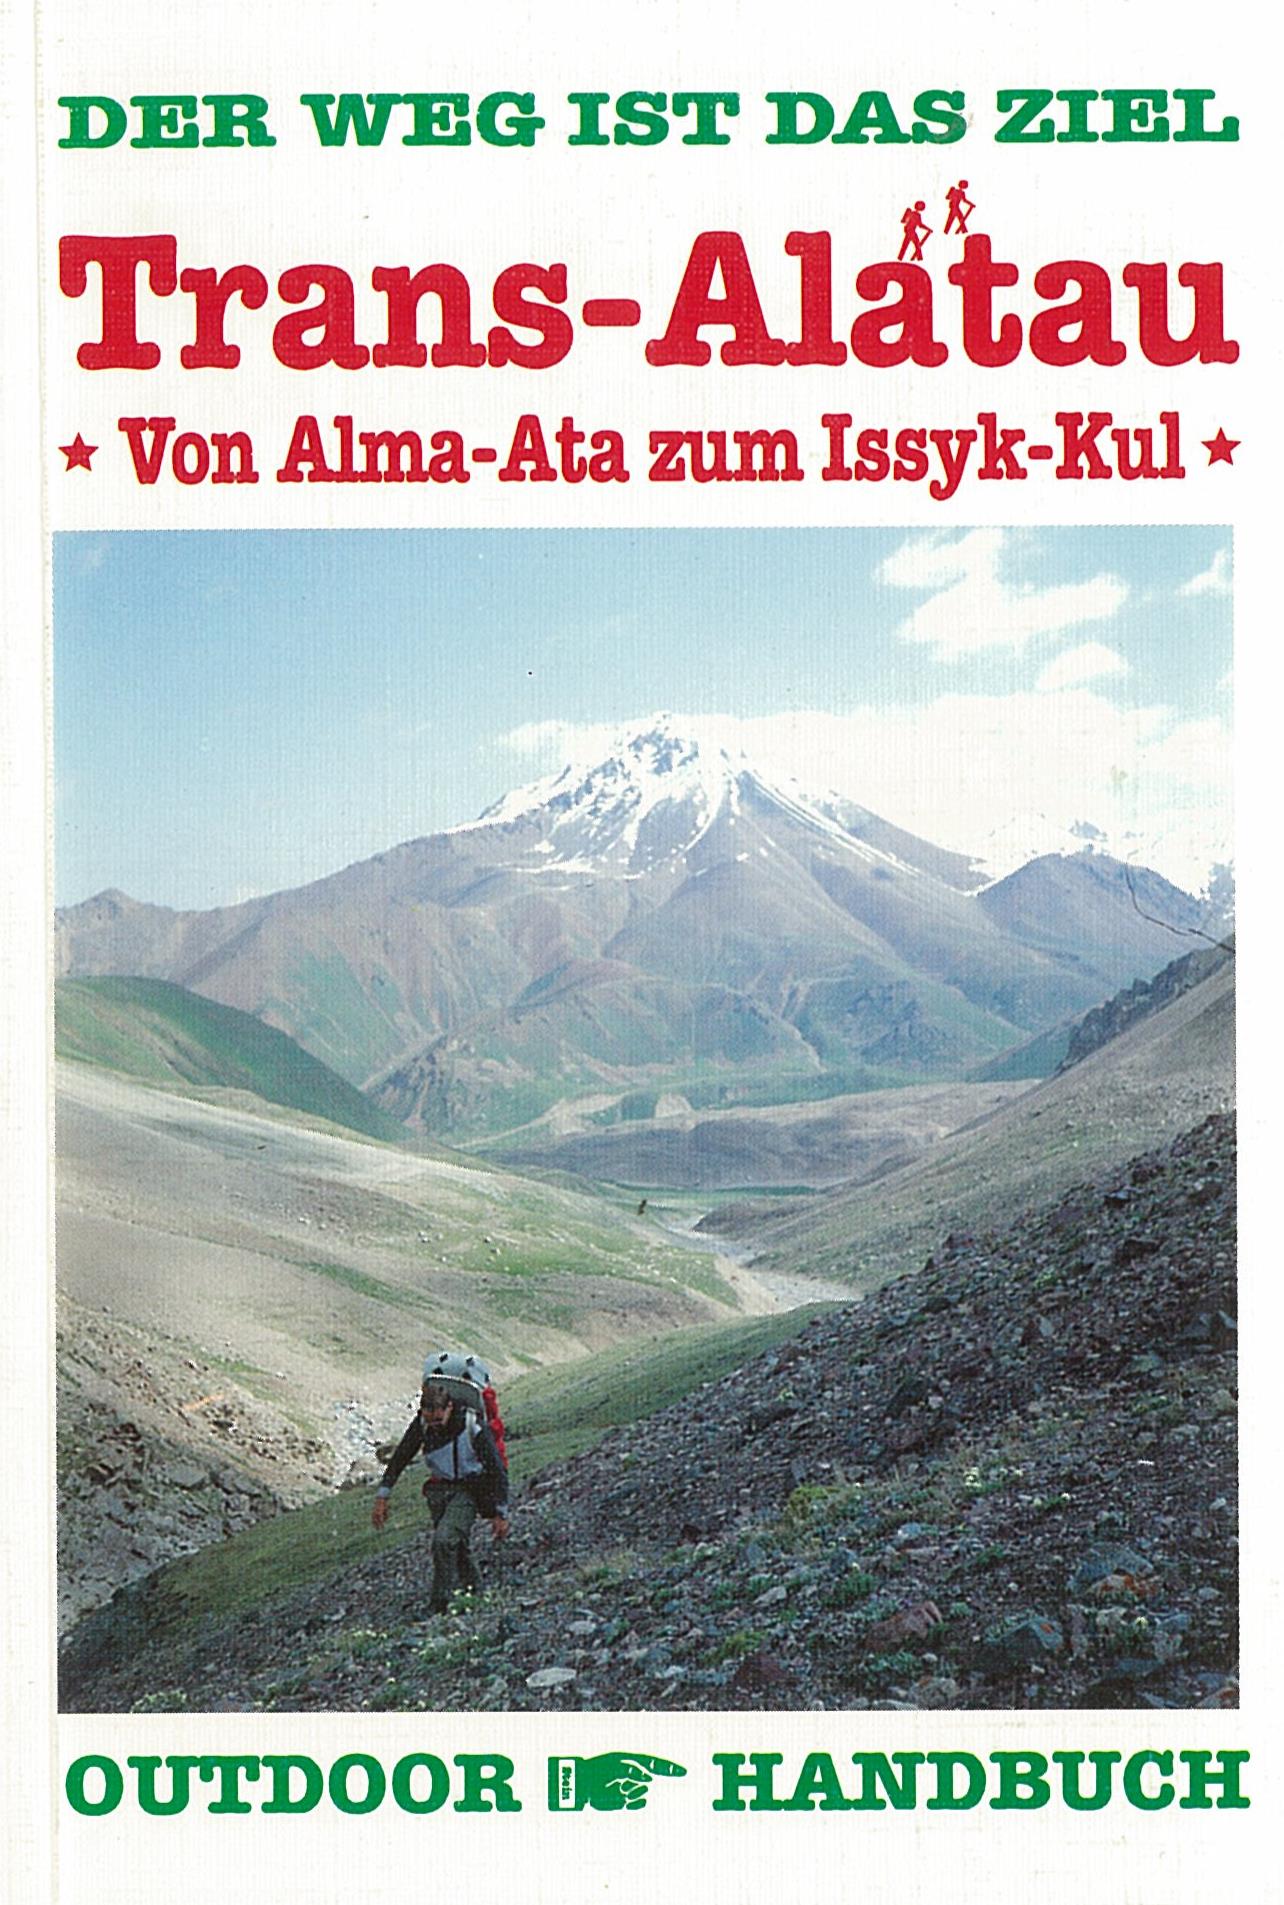 Trans-Alatau, Von Alma-Ata zum Issuk-Kul outdoor handbuch / 1996